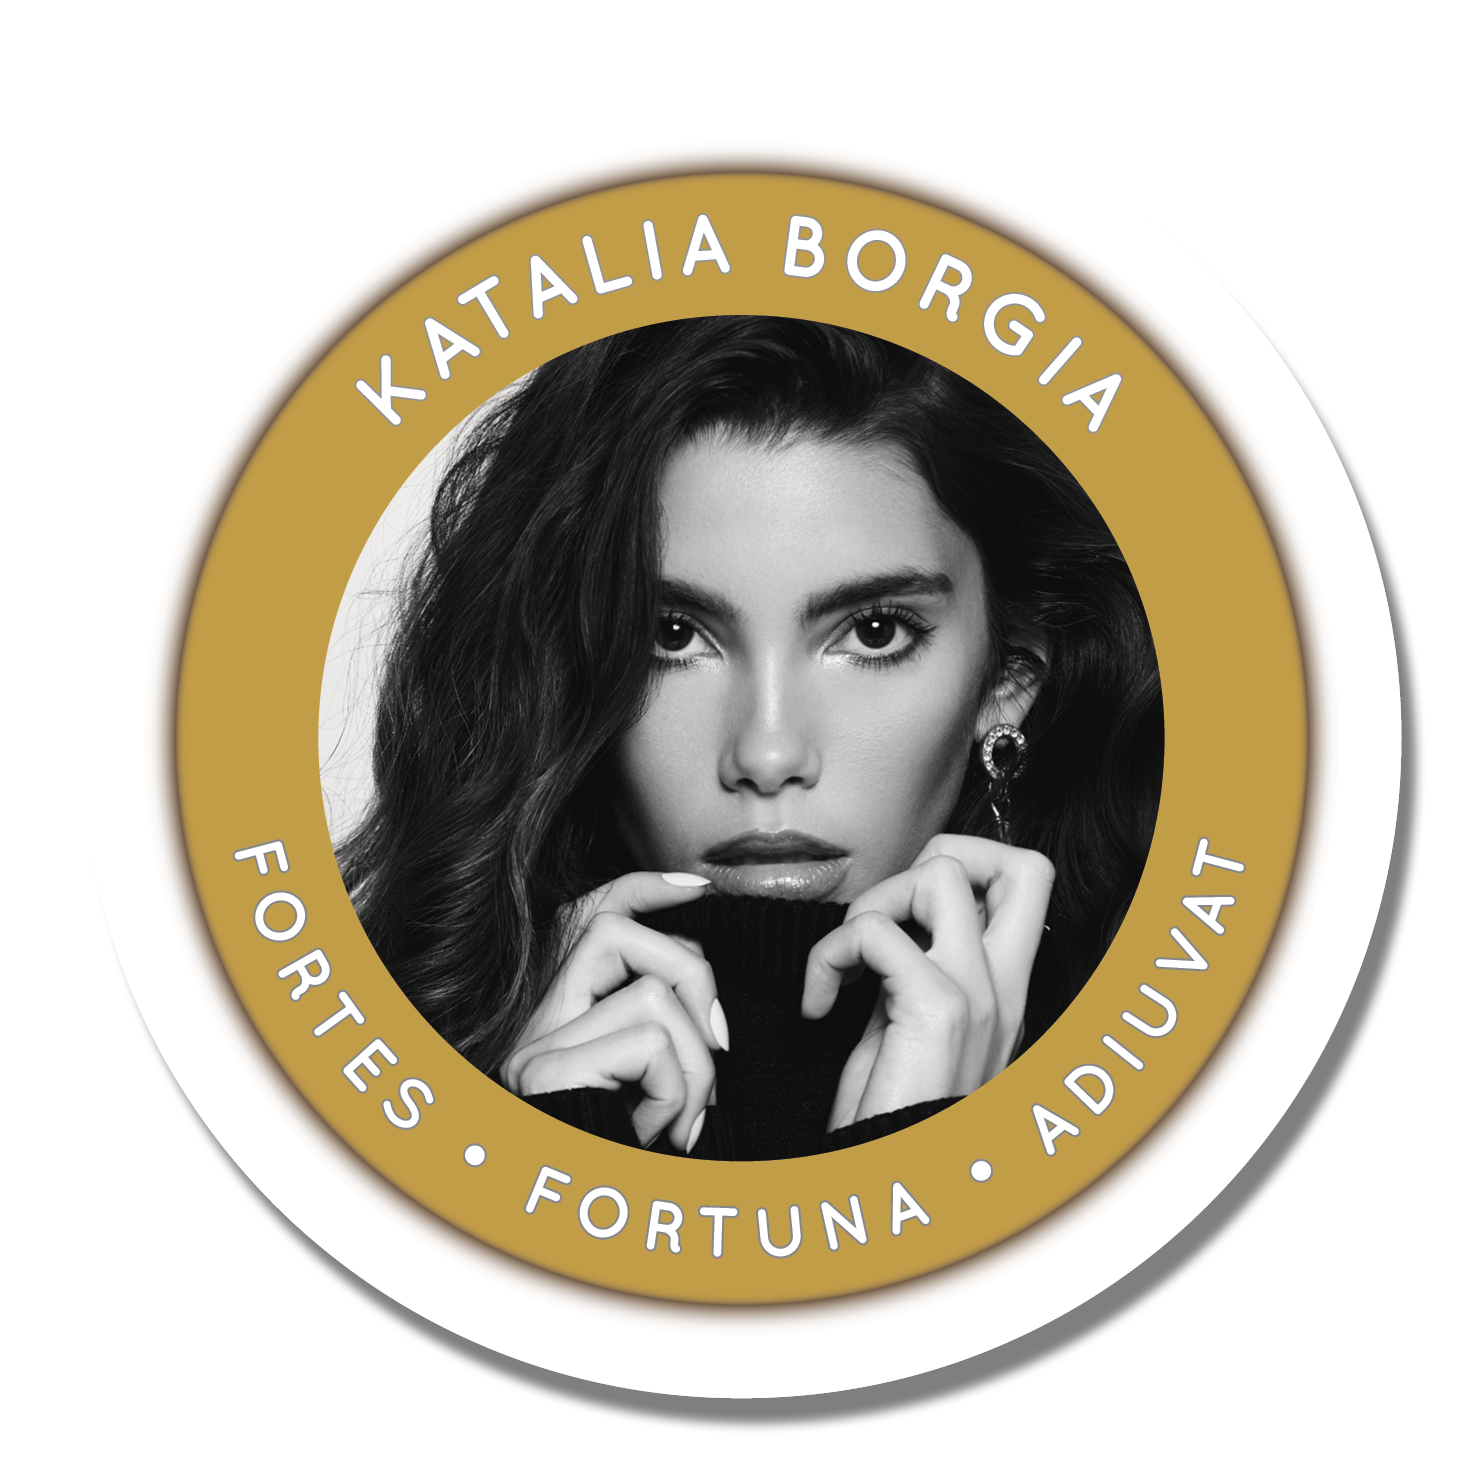 Voir un profil - Katalia Borgia 1cjf